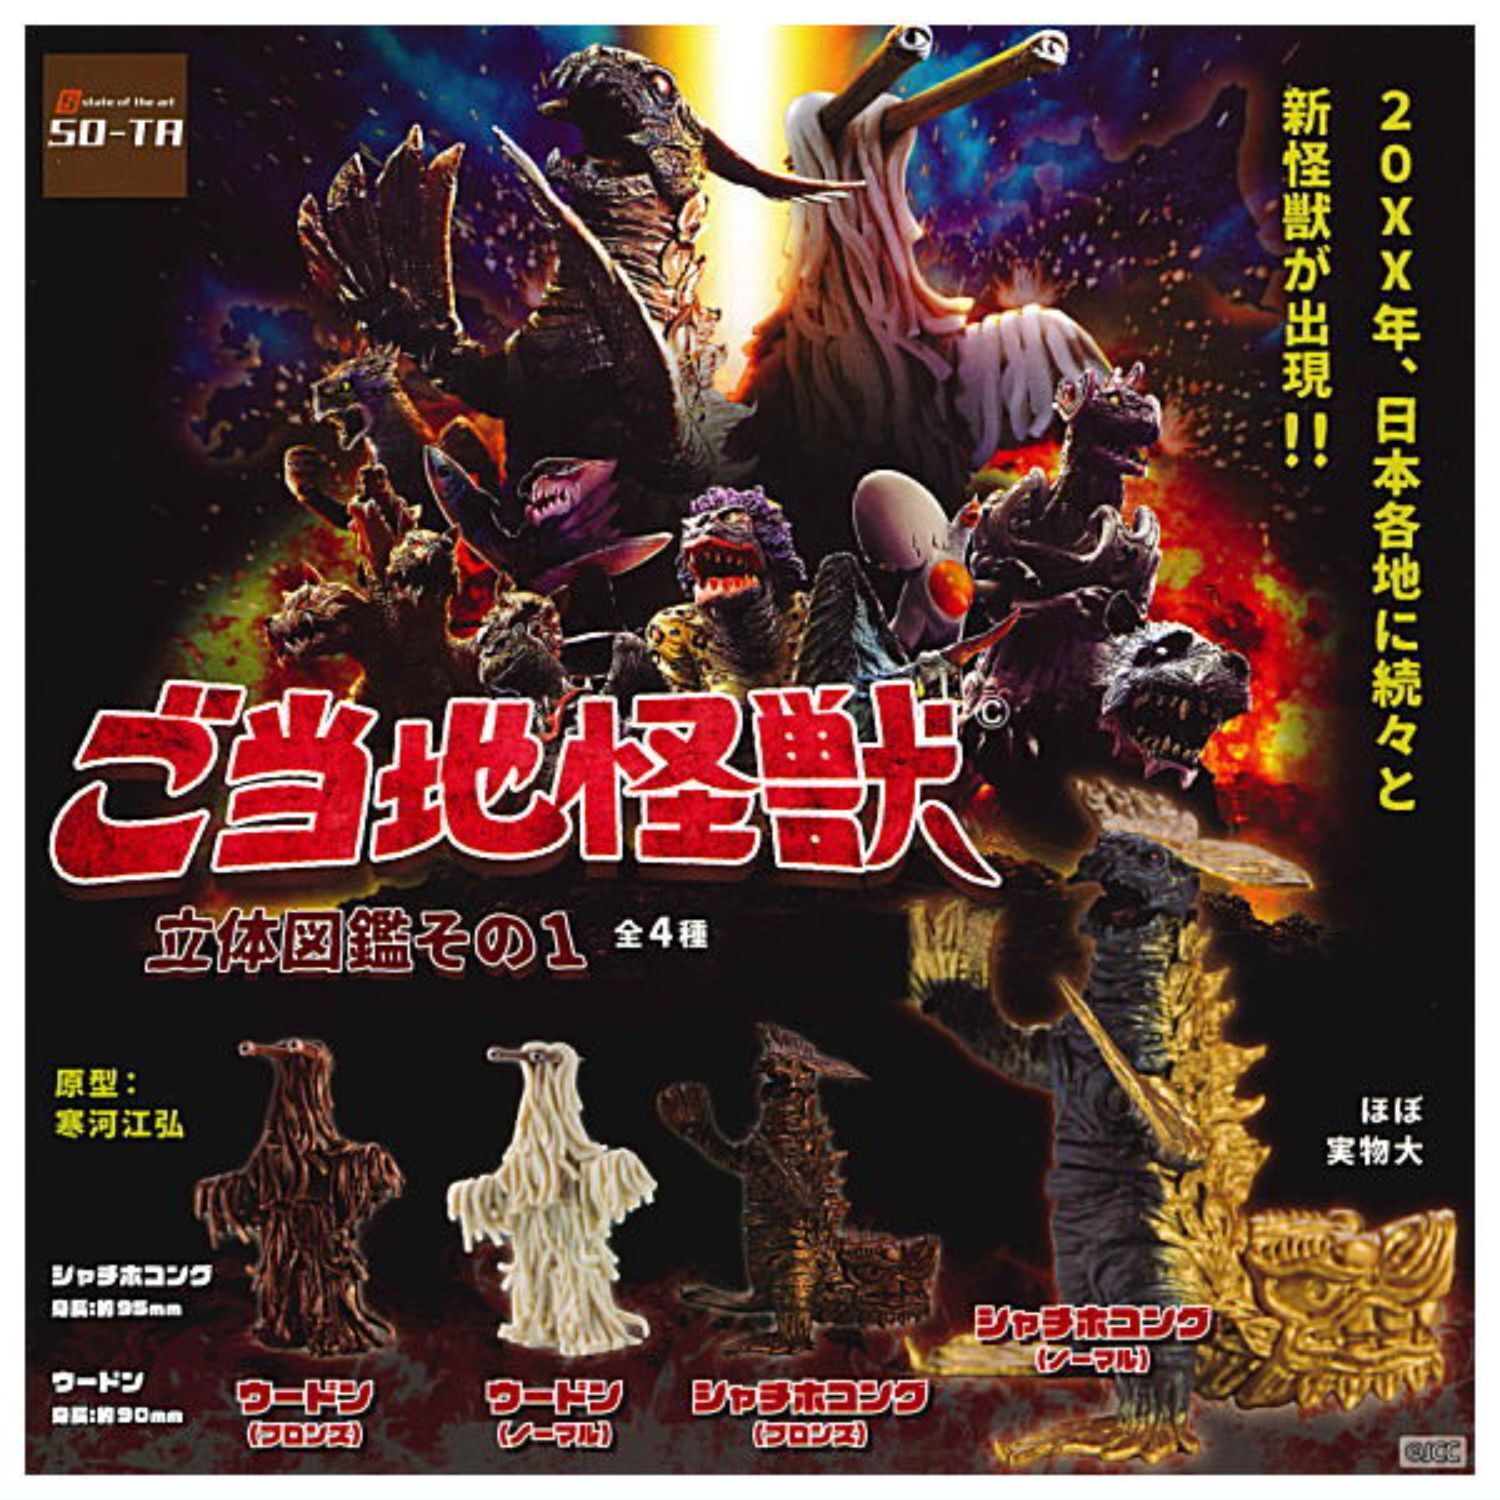 Gotochi Kaiju 3D Pictorial Book Mascot Capsule Toy 4 Types Full Comp Set Gacha